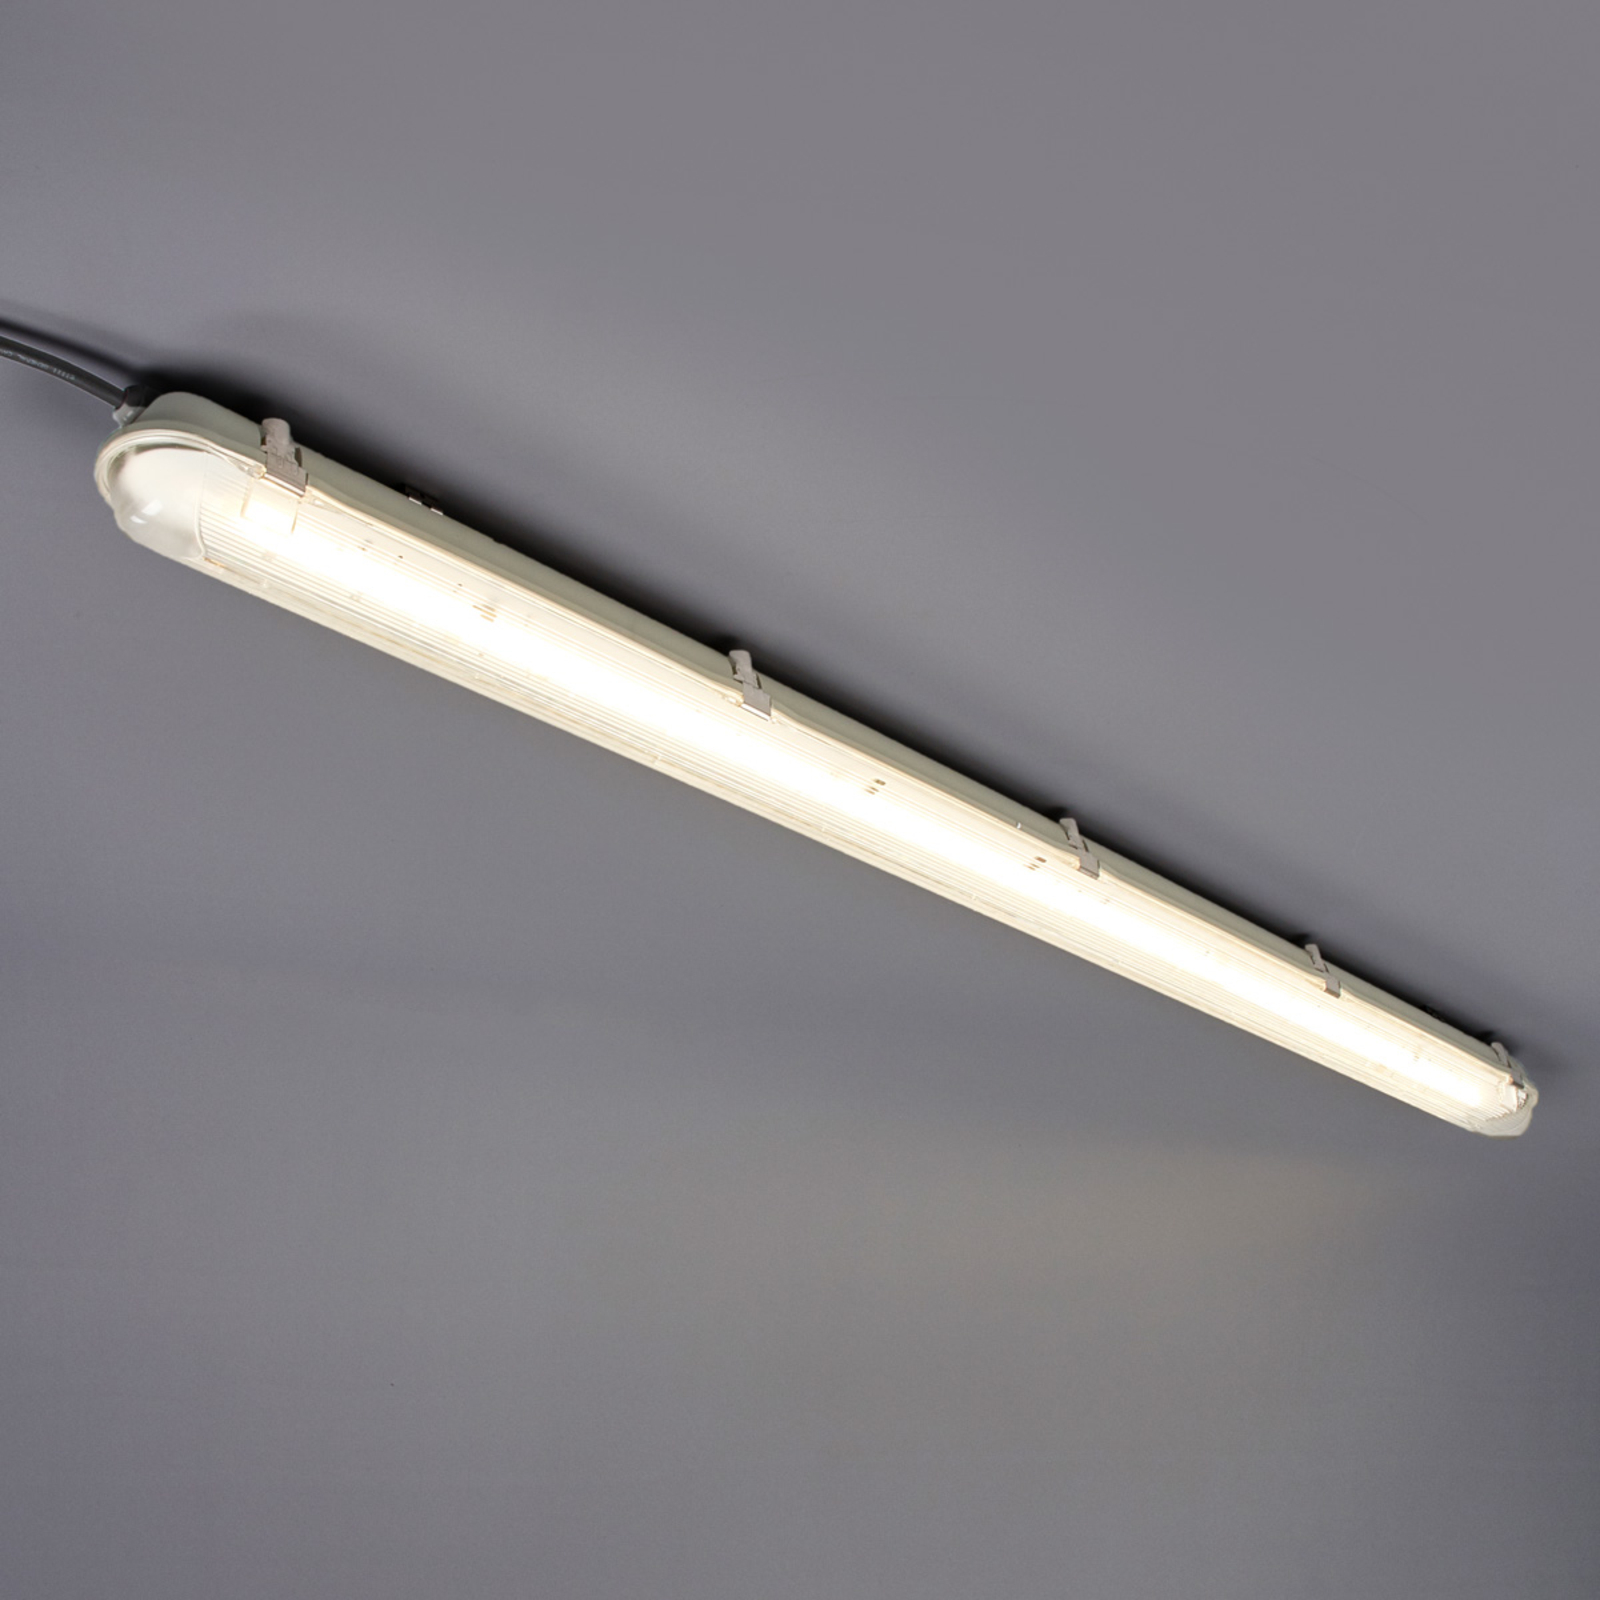 LED-våtrumslampa med IP65